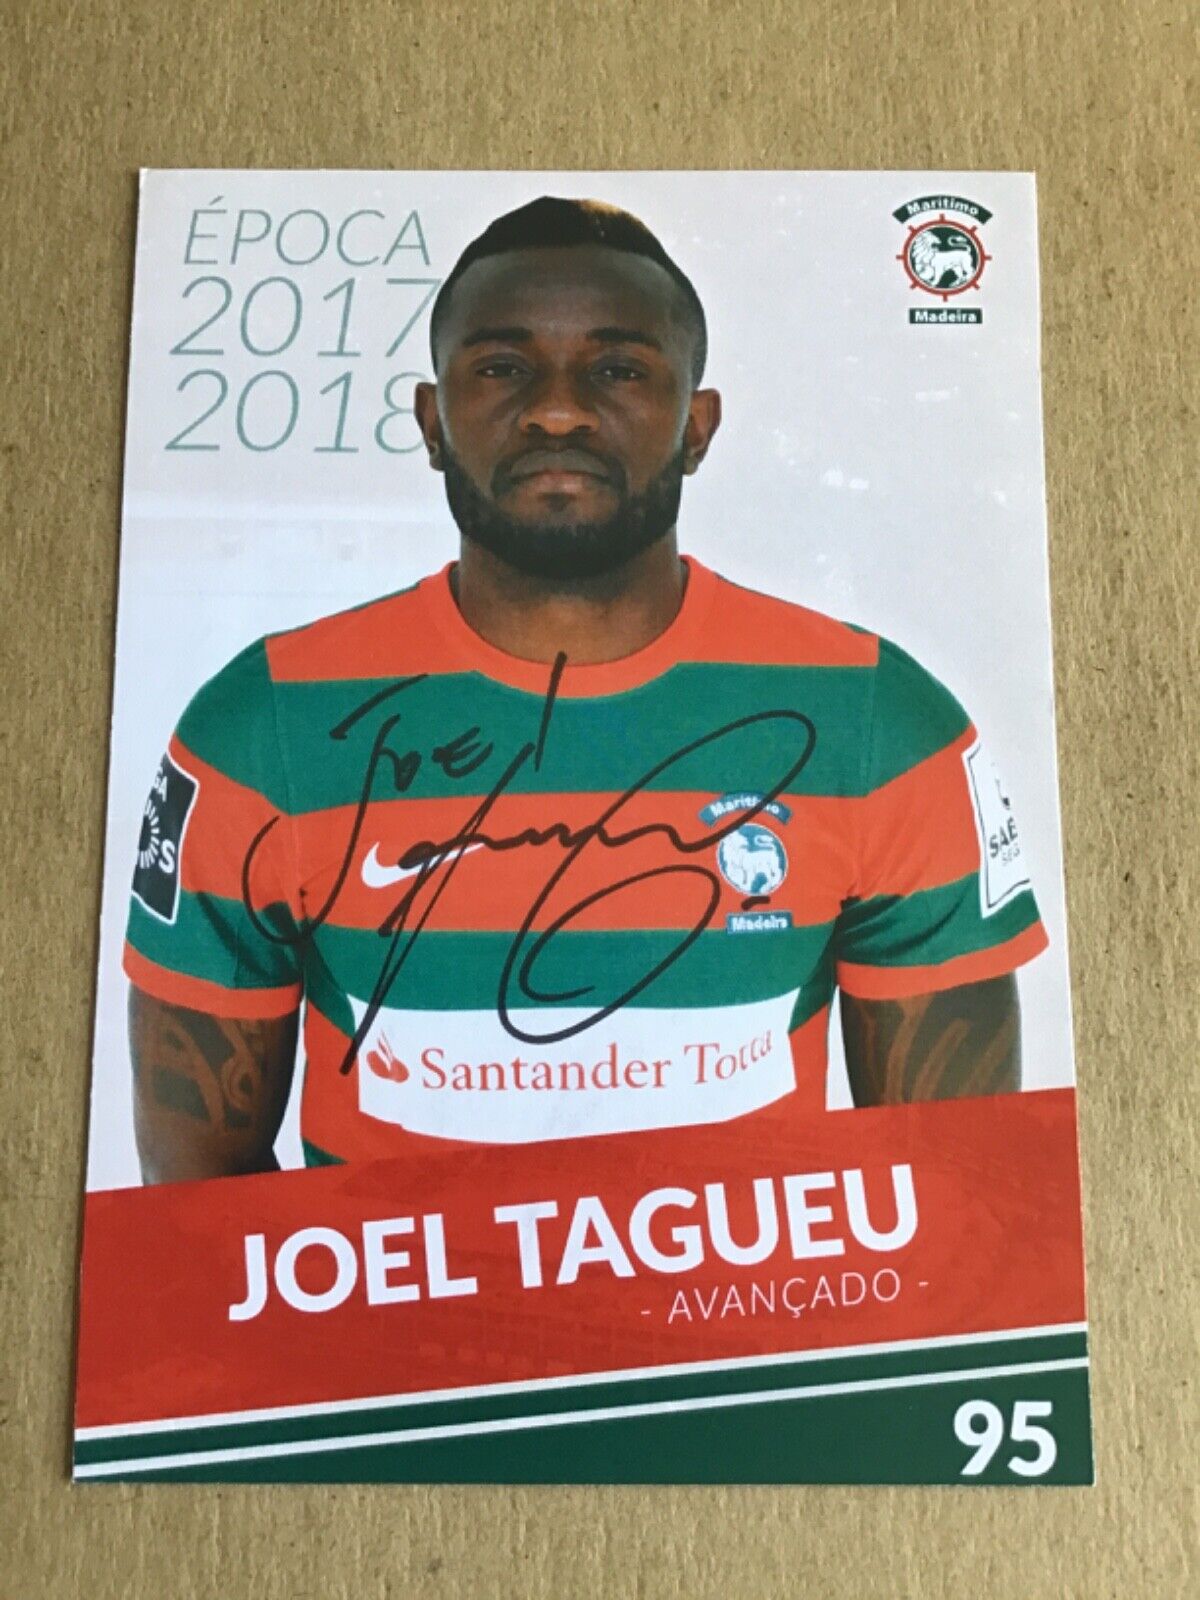 Joel Tagueu, Cameroon 🇨🇲 CS Marítimo 2017/18 hand signed